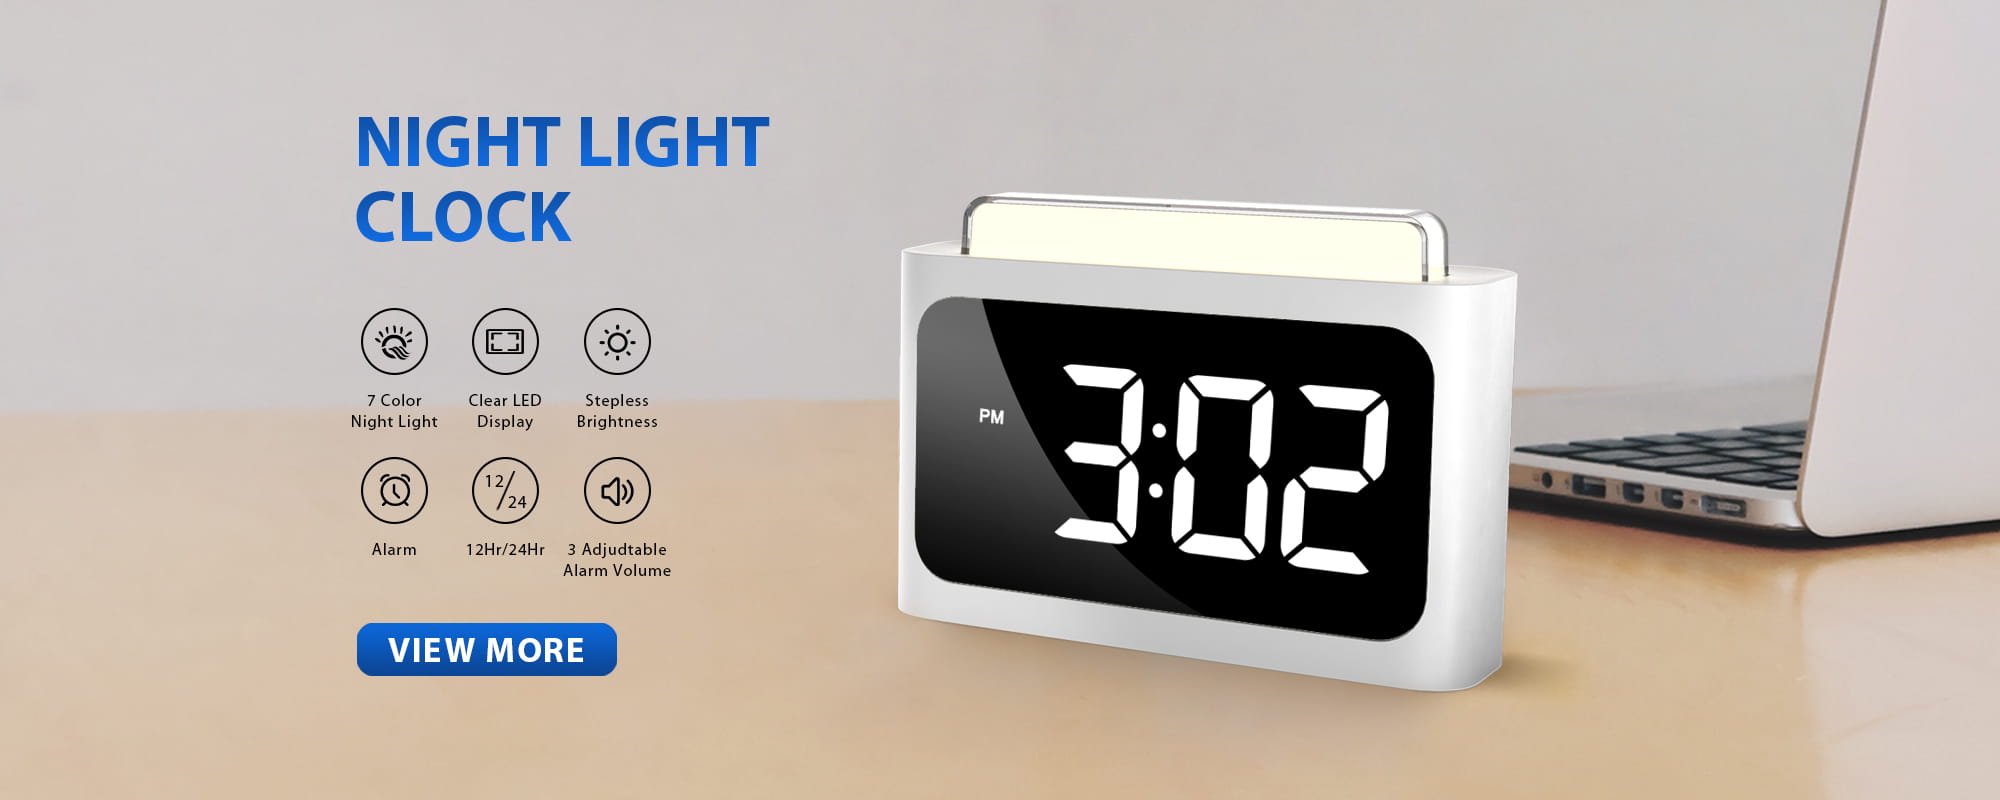 Night Light Alarm Clock